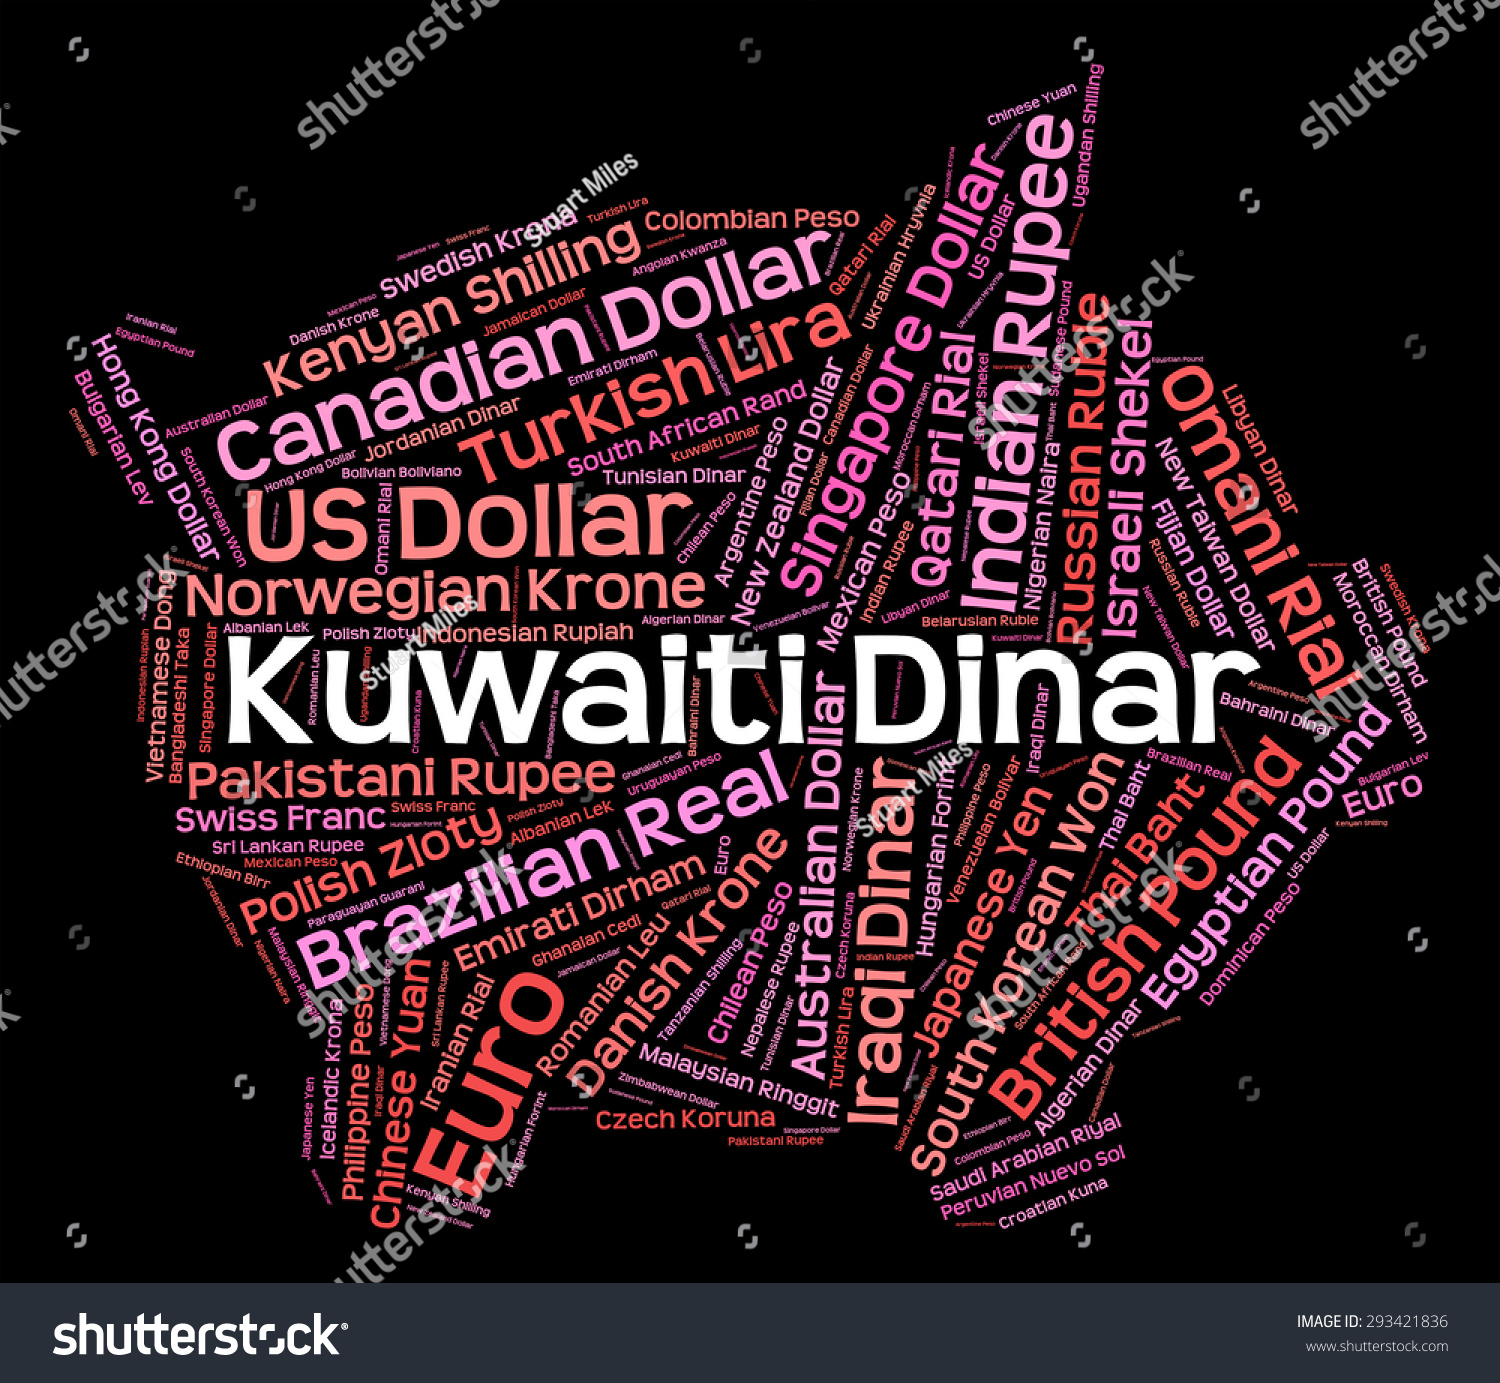 Kuwaiti Dinar Representing Forex Trading Kwd Stock Illustration - 